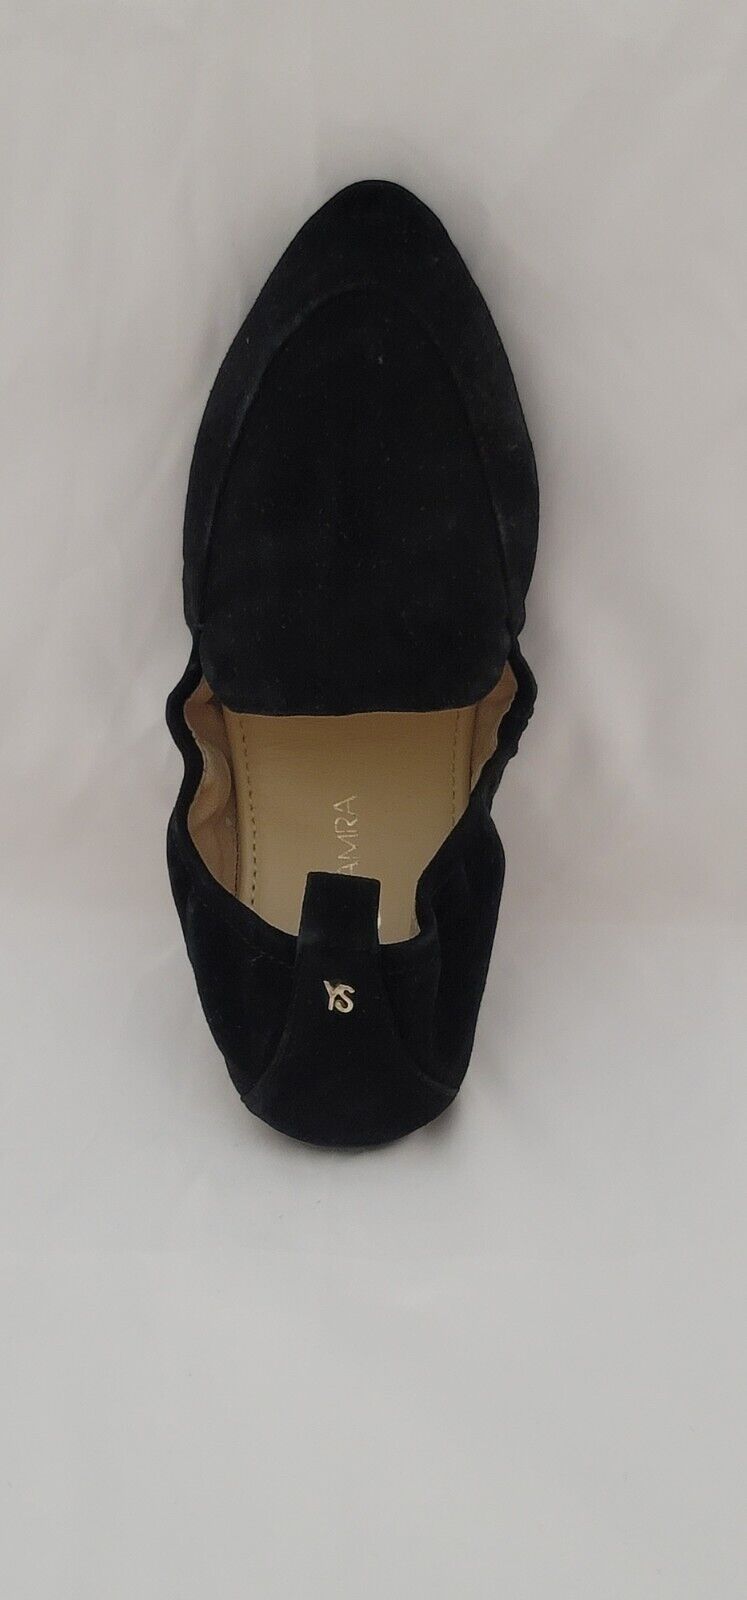 Yosi Samra Women's Skyler Loafer Ballet Flats, Black Suede Size US 6